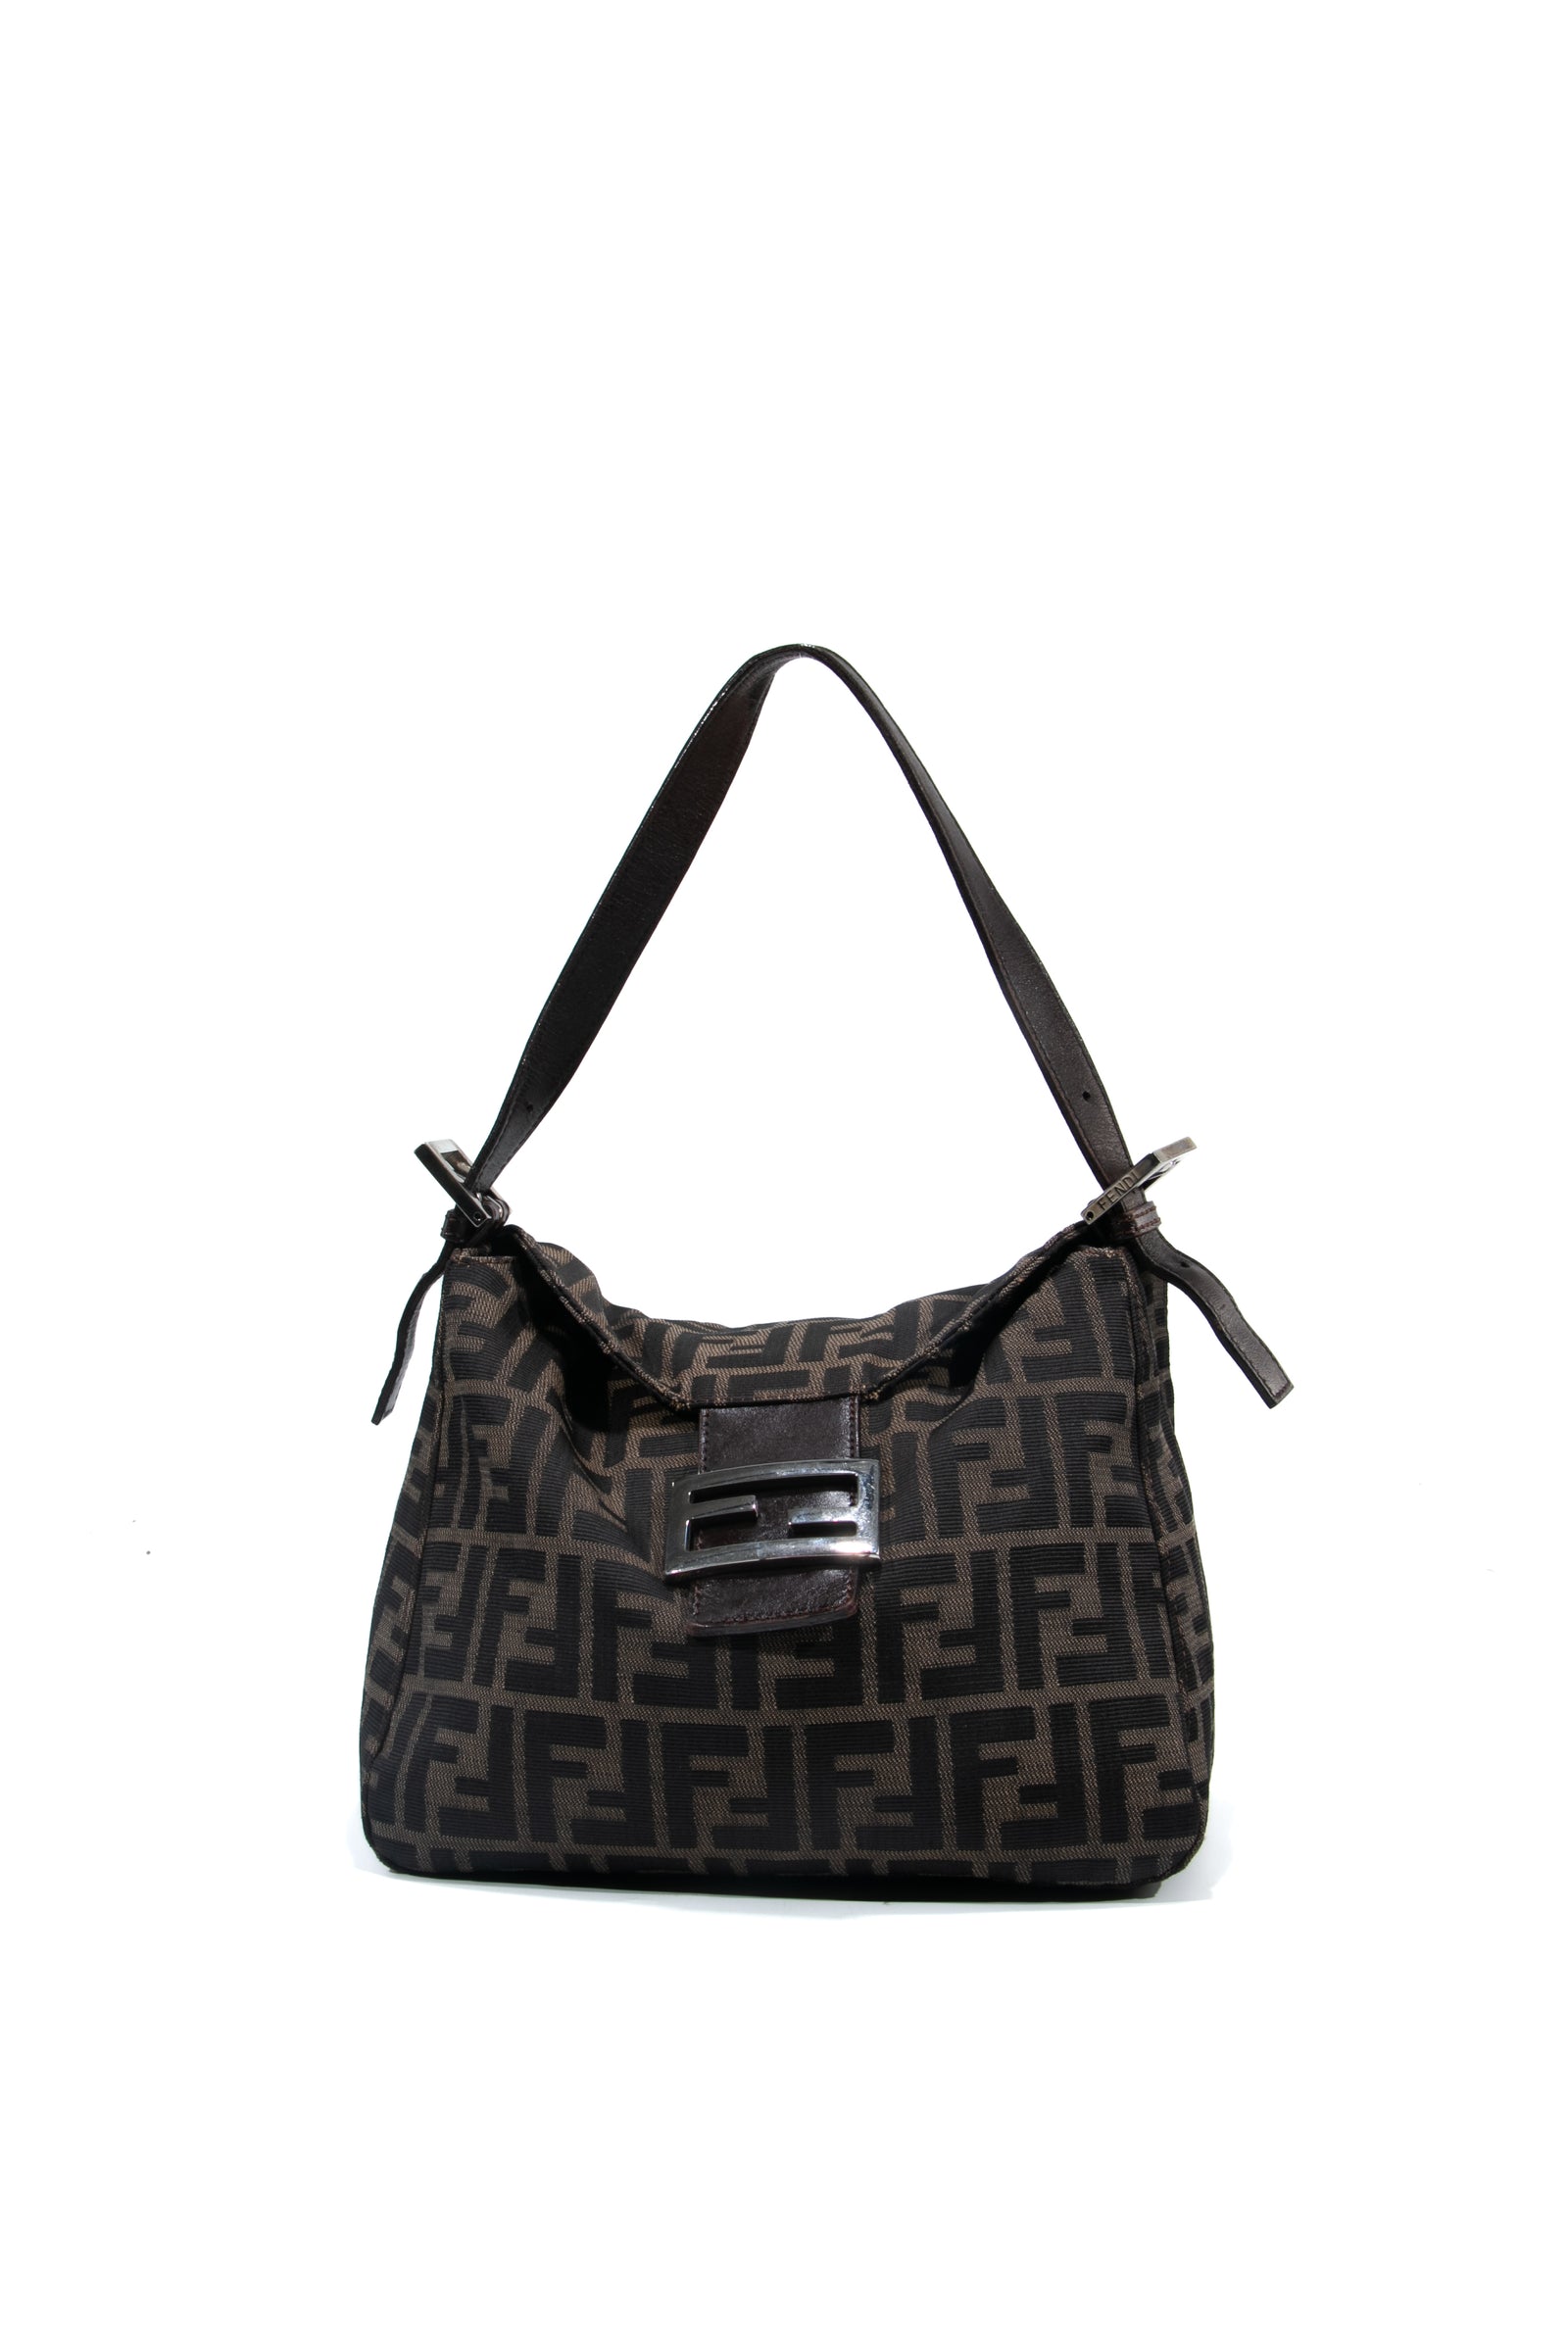 Fendi Roma Plain Ladies Trendy Leather Handbag, Size: Zero Size